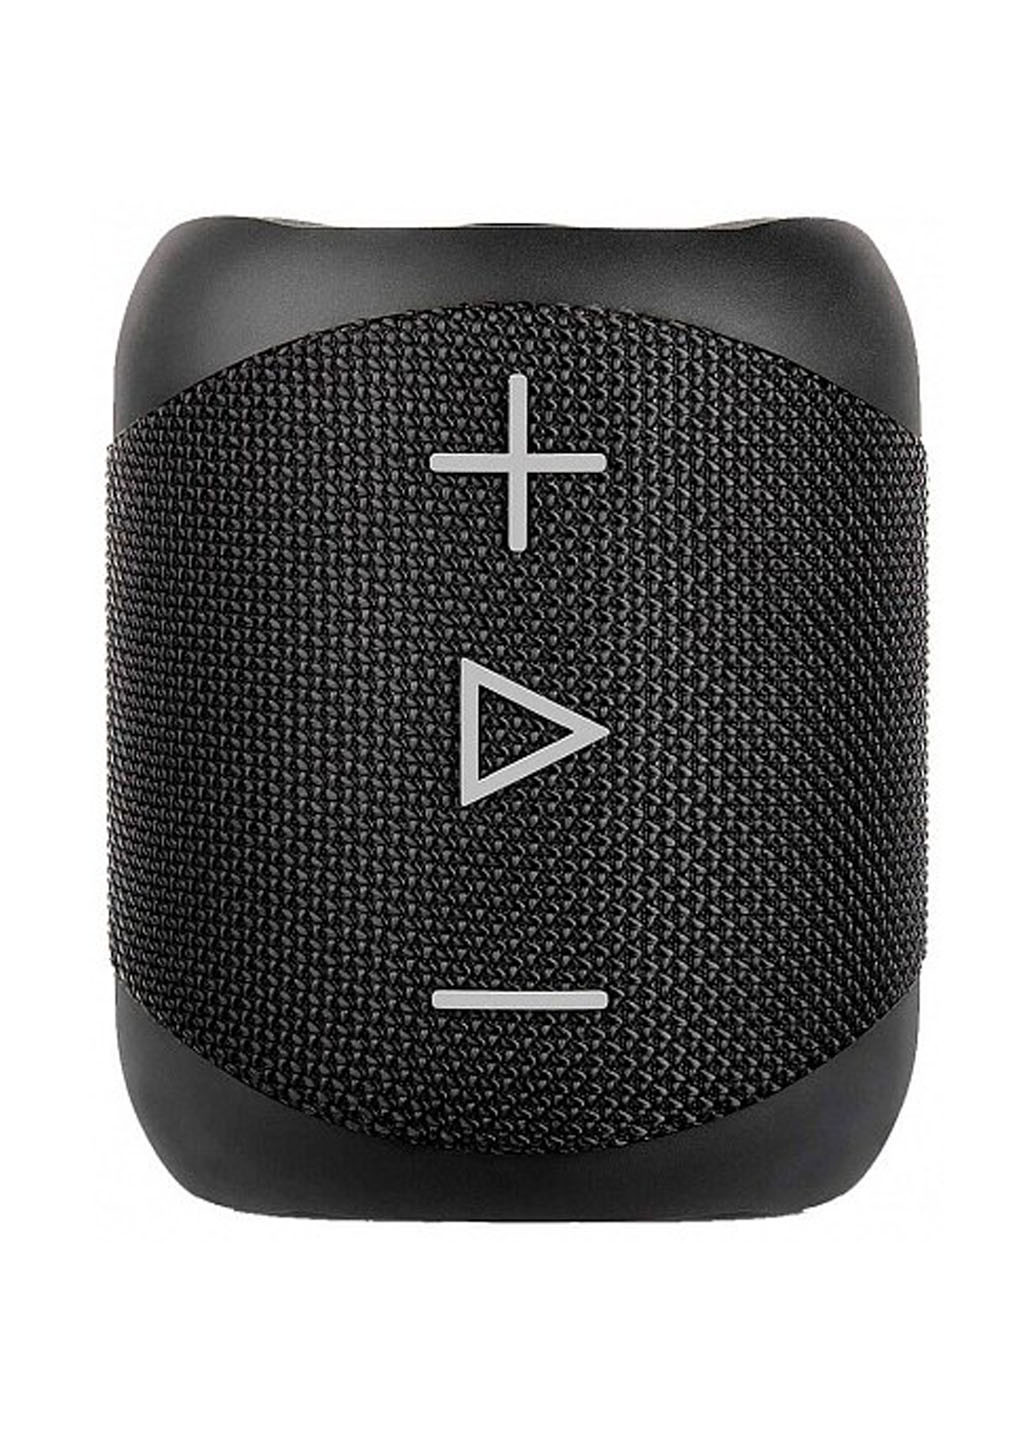 Портативна акустика Compact Wireless Speaker Black (GX-BT180 (BK)) Sharp compact wireless speaker black (gx-bt180(bk)) (143197277)